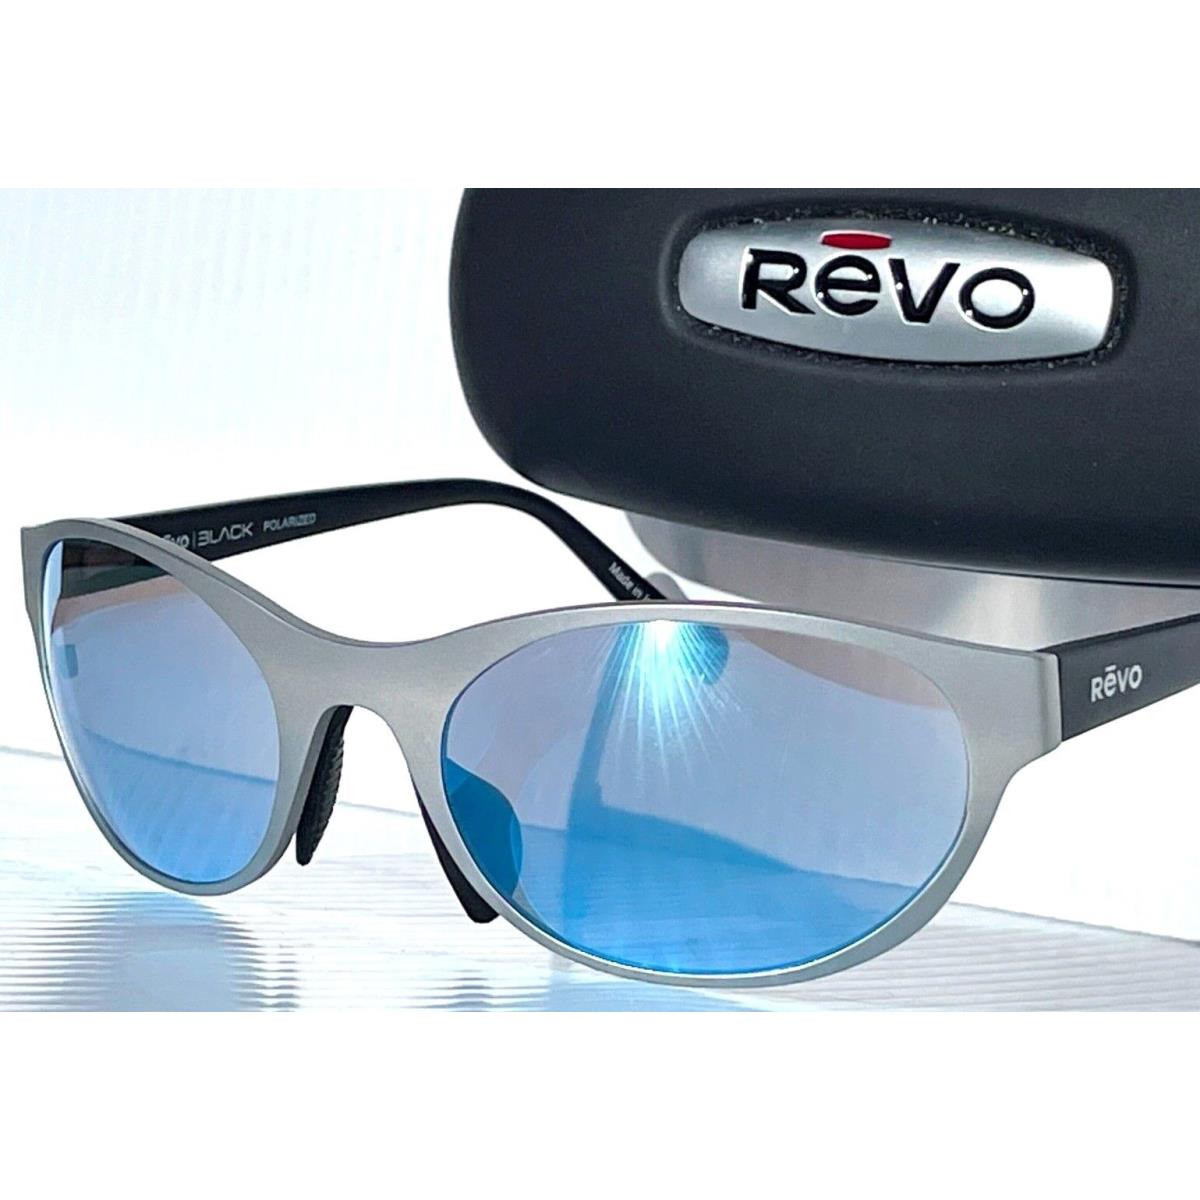 Revo sunglasses ICON Oval - Silver Frame, Blue Lens